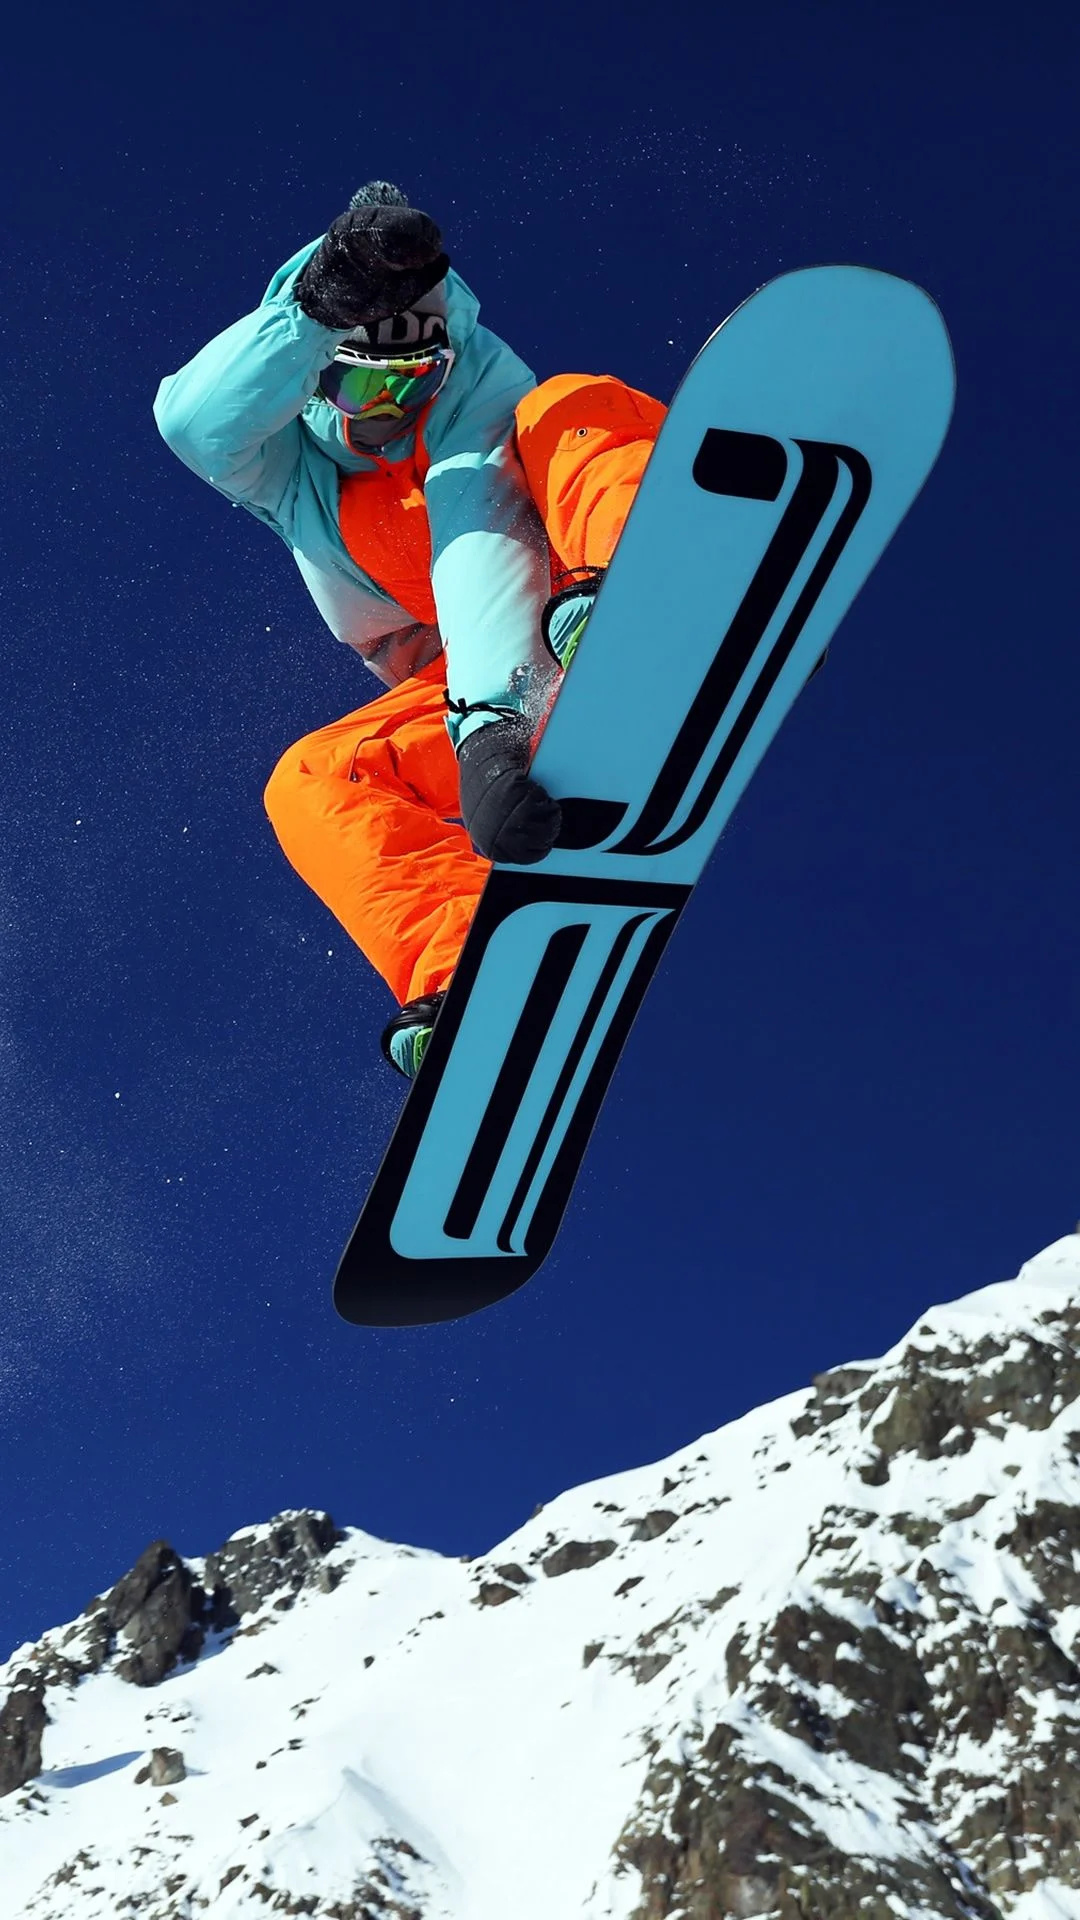 Snowboarding: Travis Rice, John Jackson, Red Bull Aerial Tricks and Big Air performance. 1080x1920 Full HD Wallpaper.